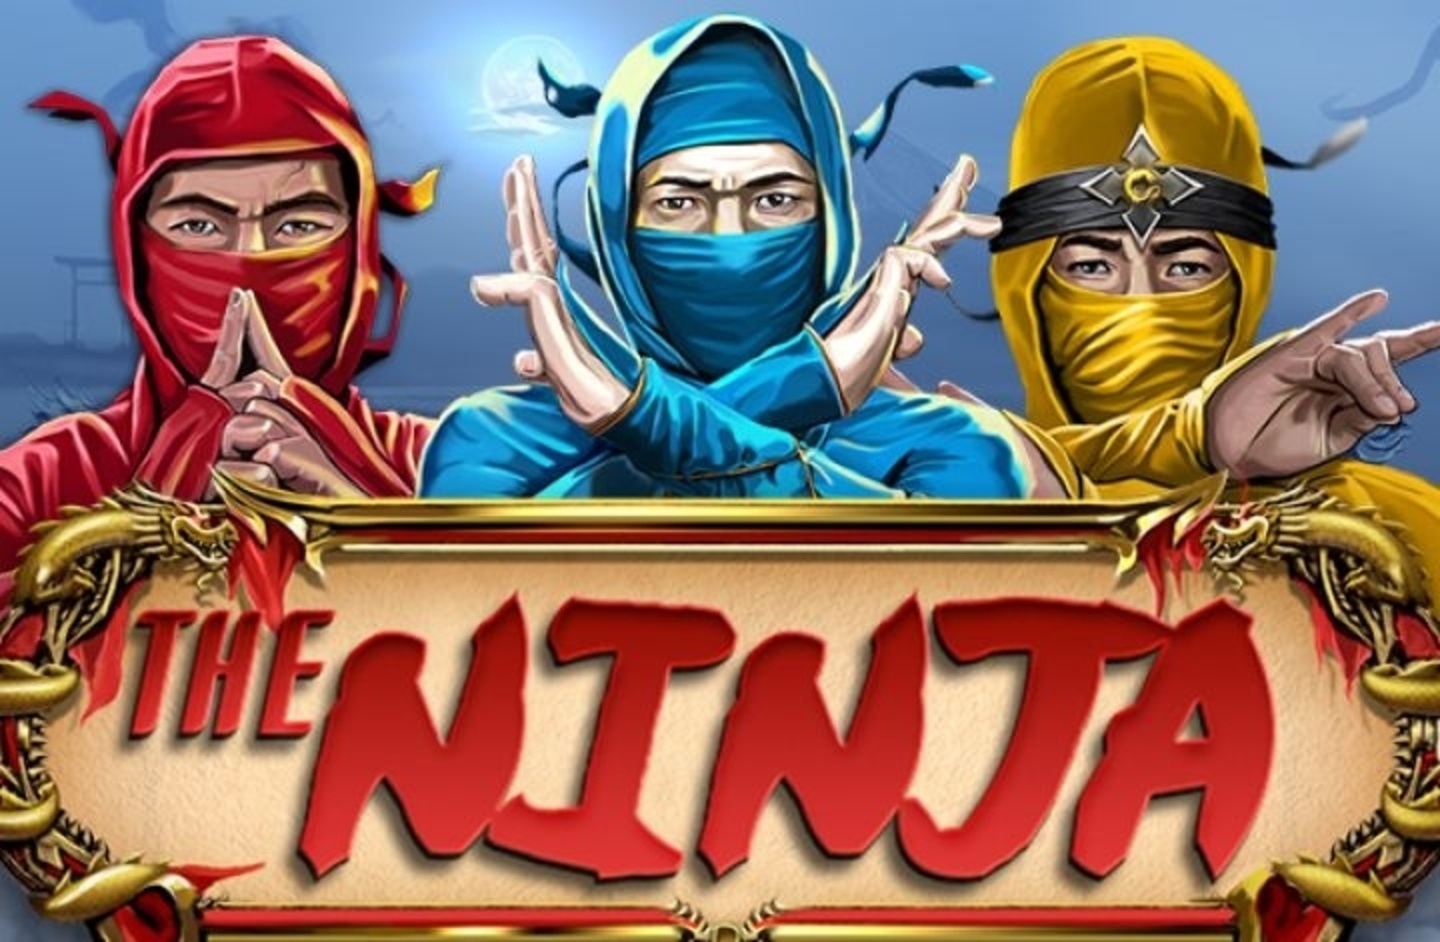 The Ninja demo